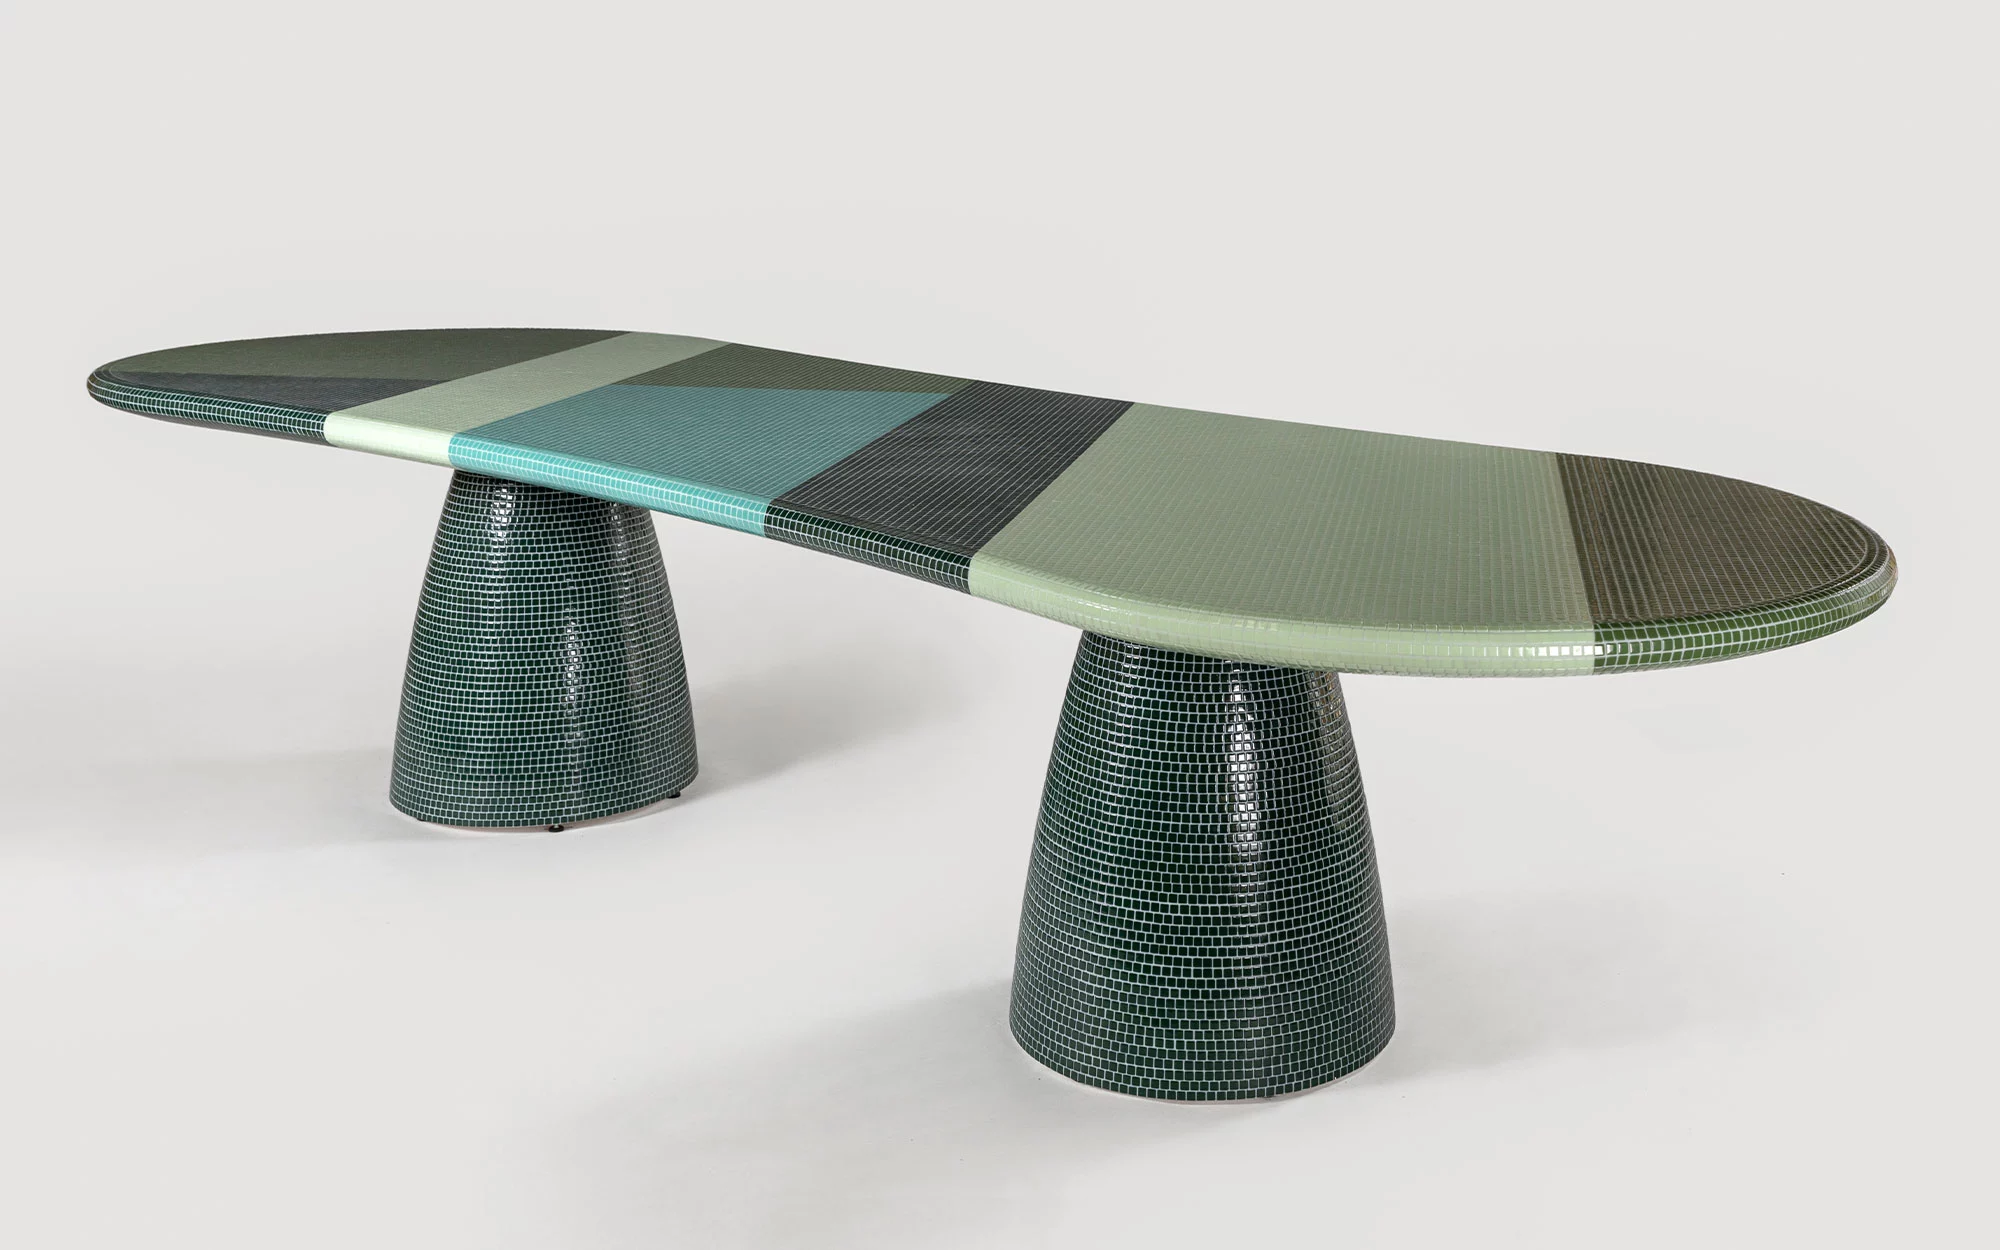 Umbria Dining Table - Alessandro Mendini - Mirror - Galerie kreo